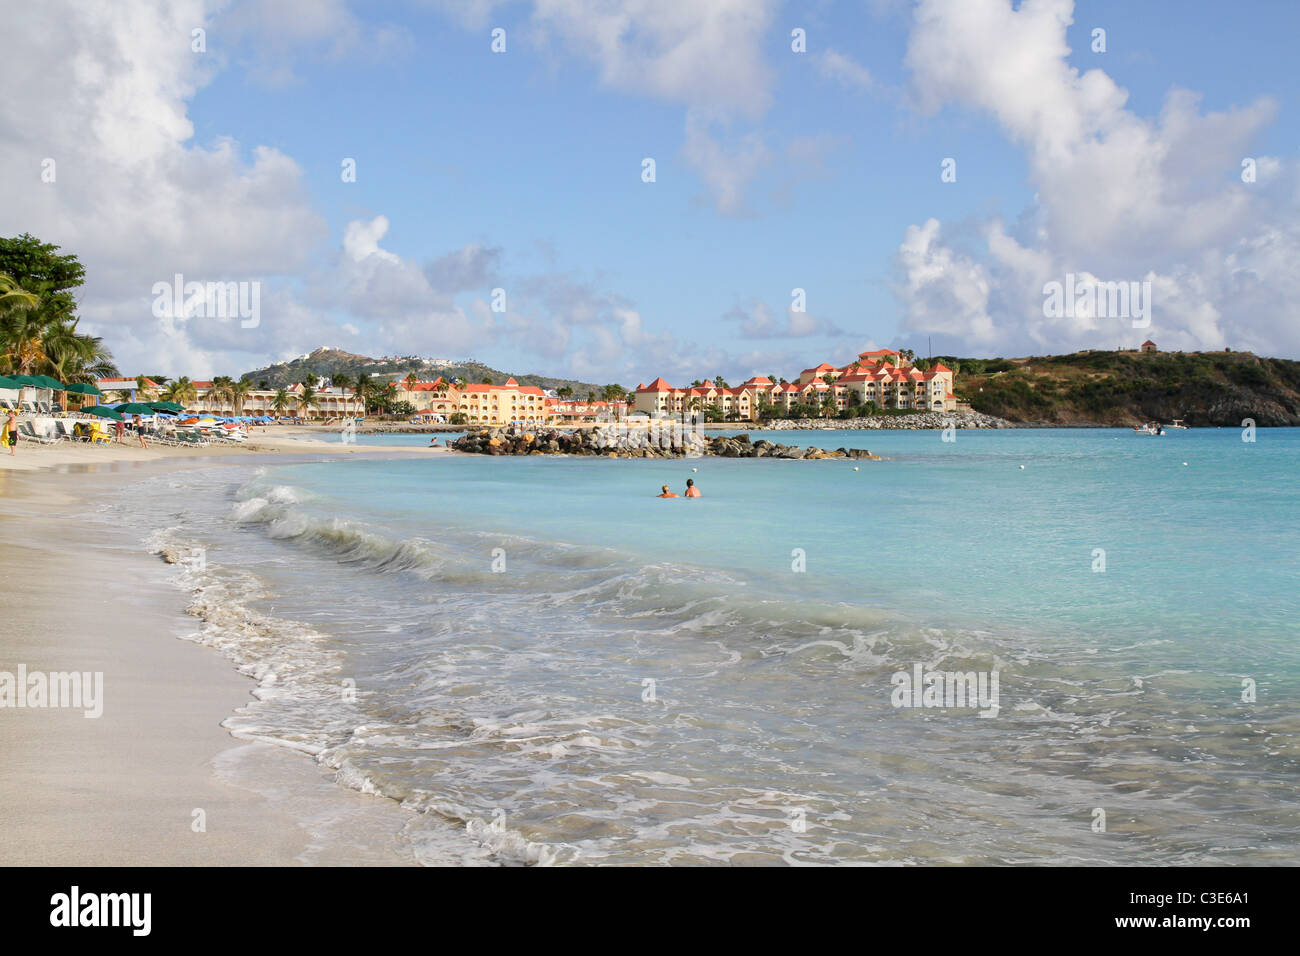 The beach at Little Bay, St Maarten Stock Photo